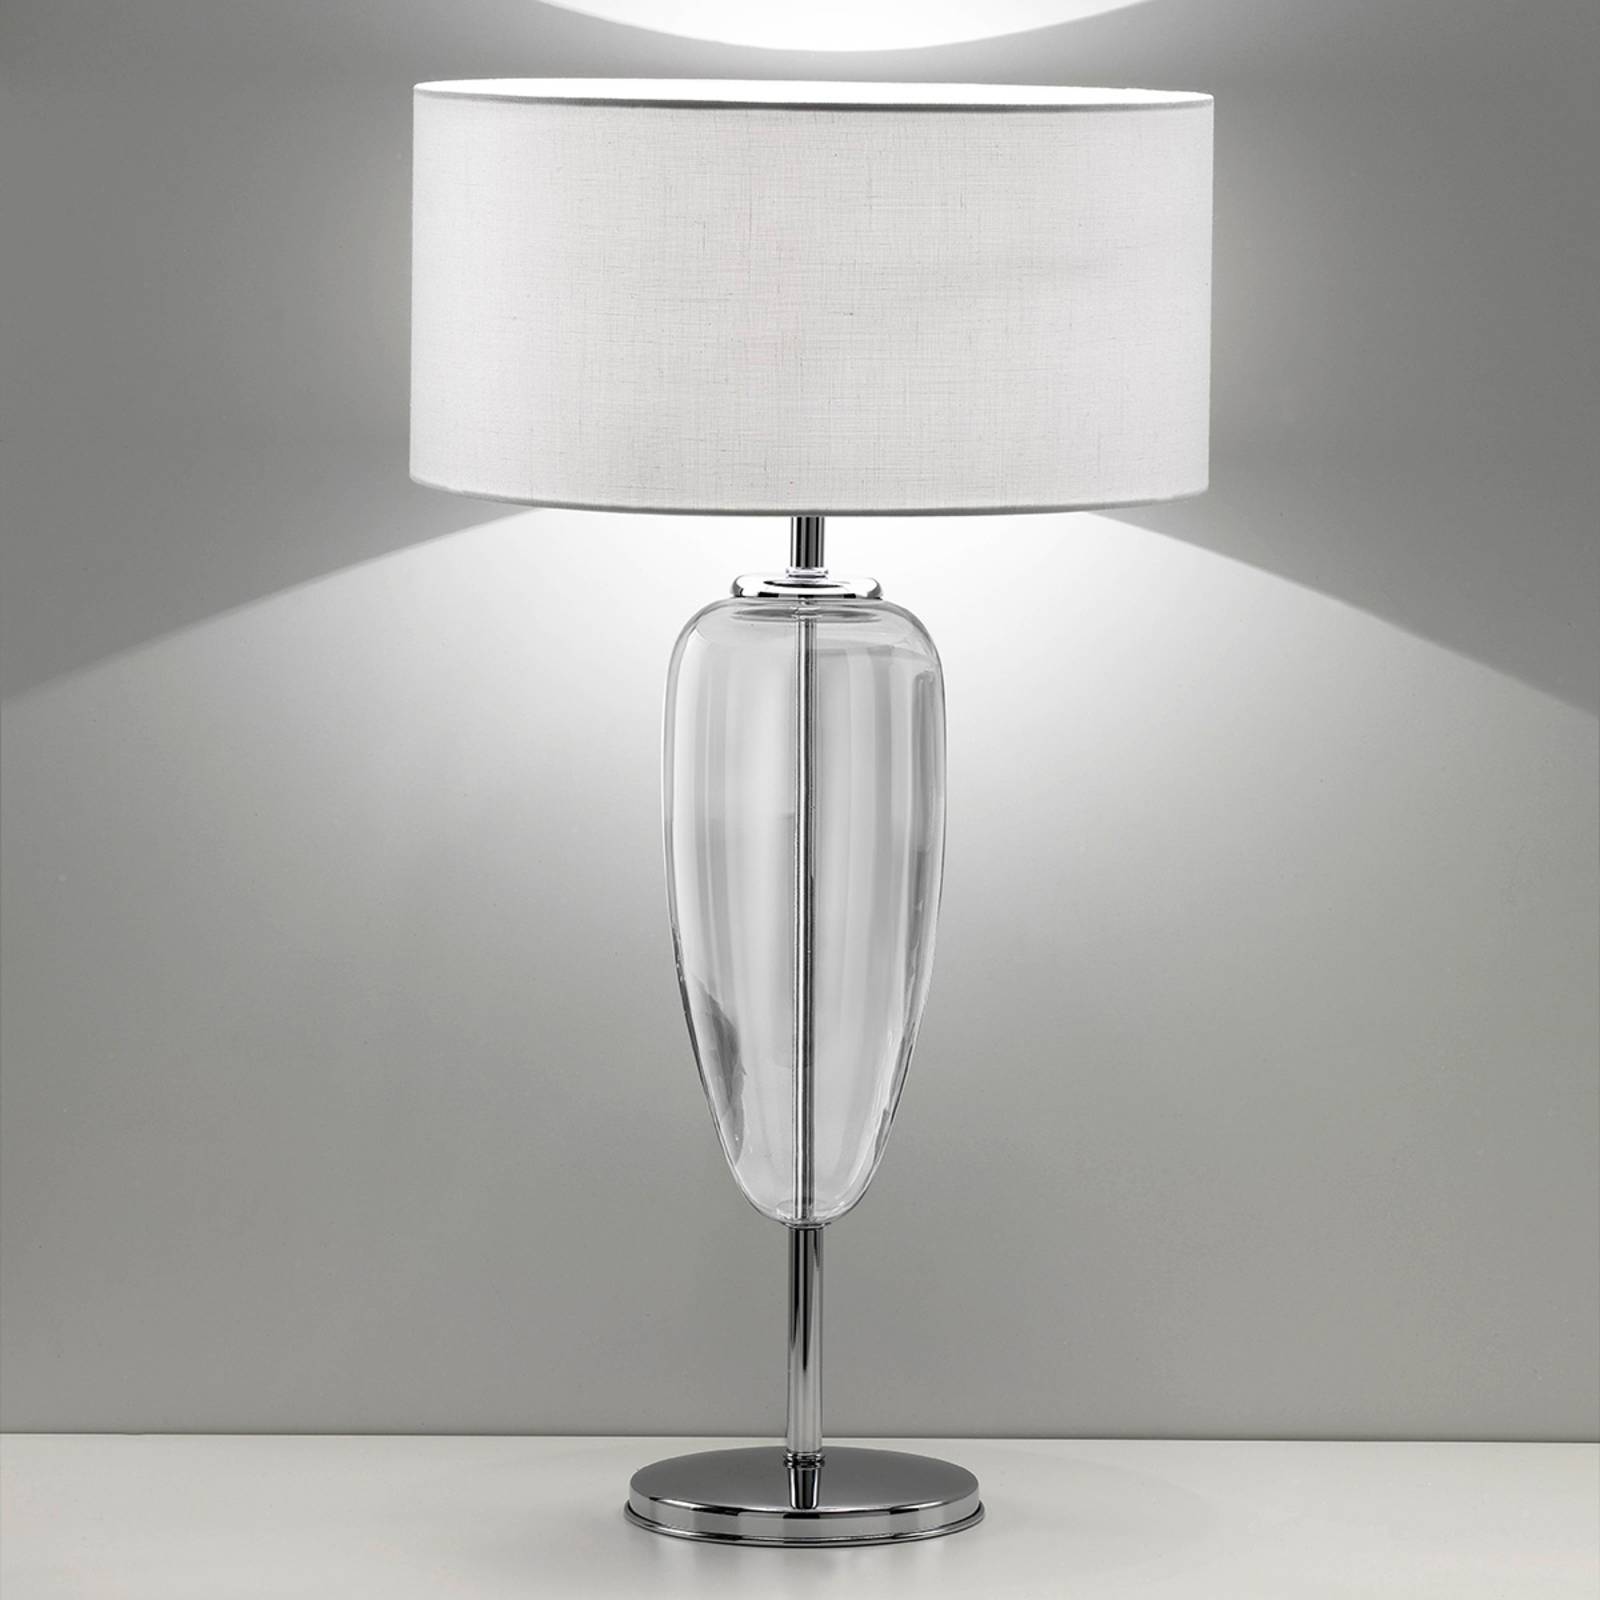 Tischlampe Show Ogiva, Glaselement klar, Höhe 82 cm von Ailati